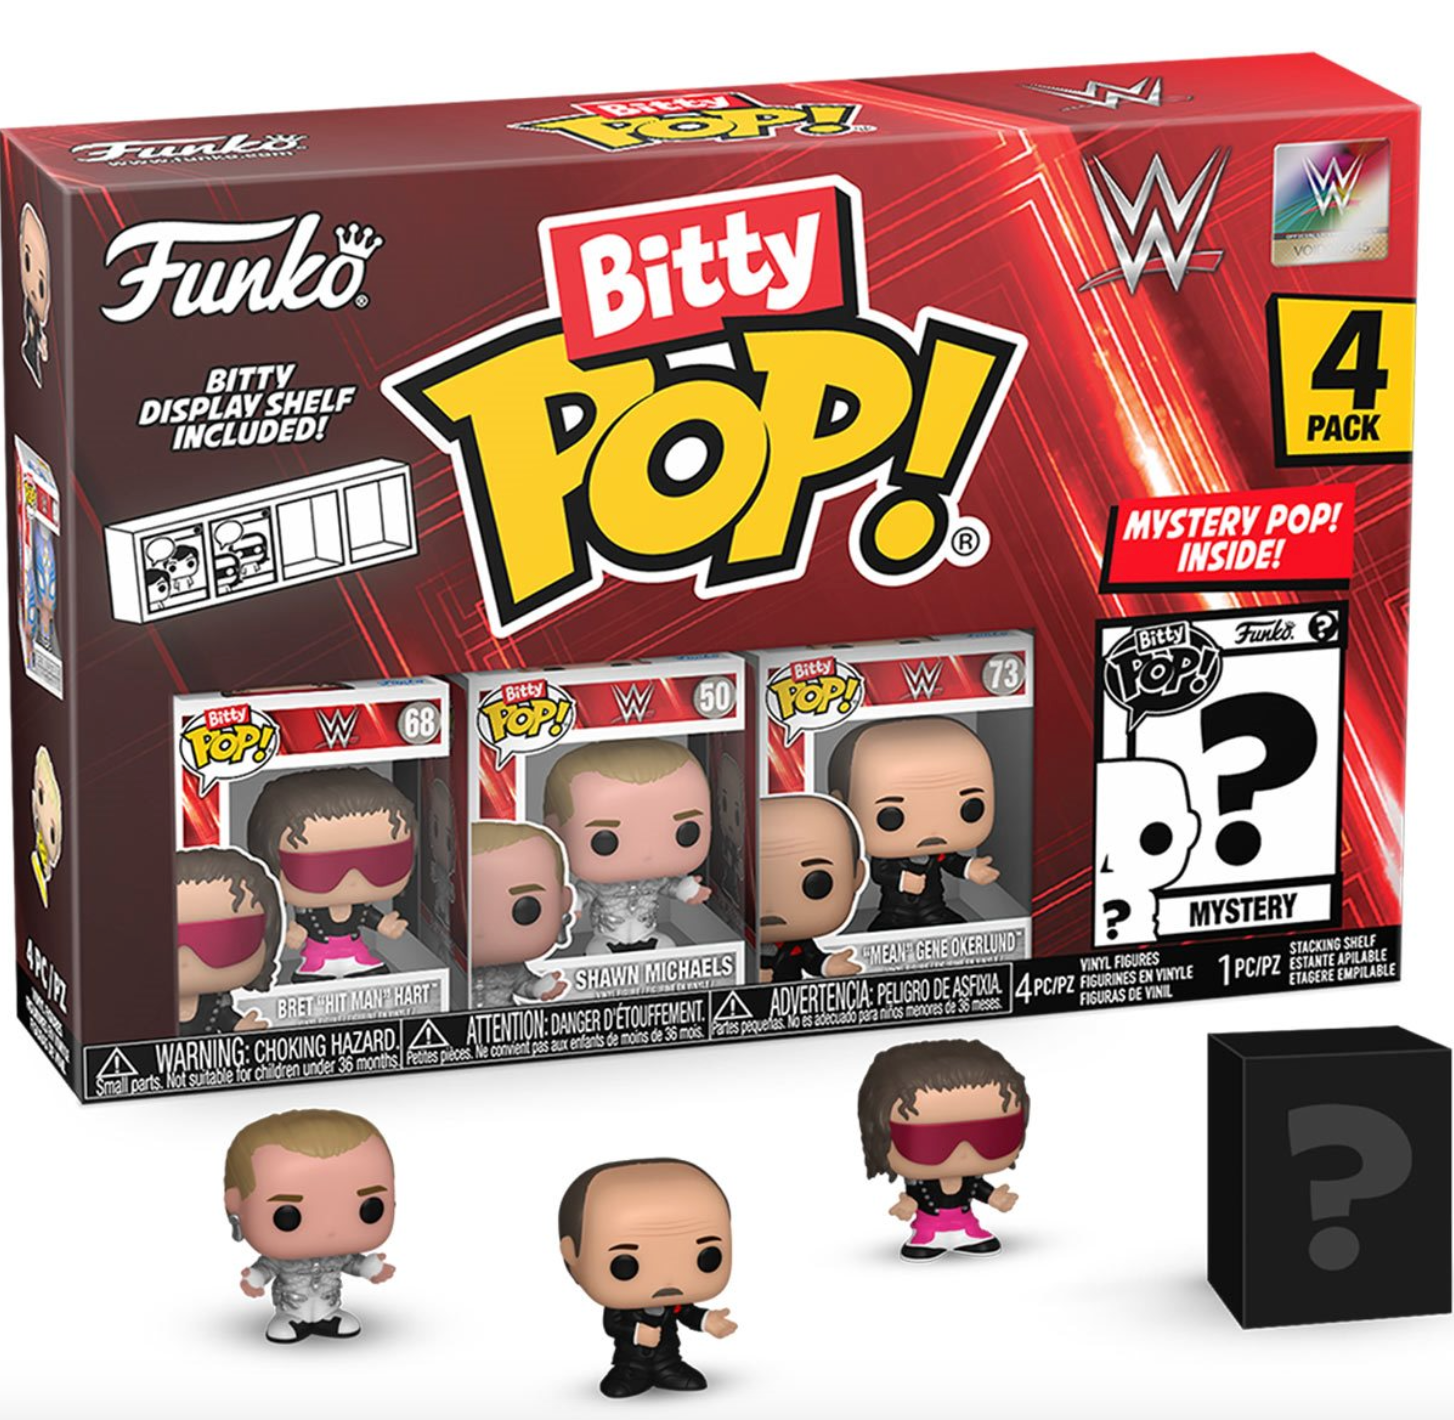 WWE Bret "Hit Man" Hart Funko Bitty Pop! Mini-Figure 4-Pack